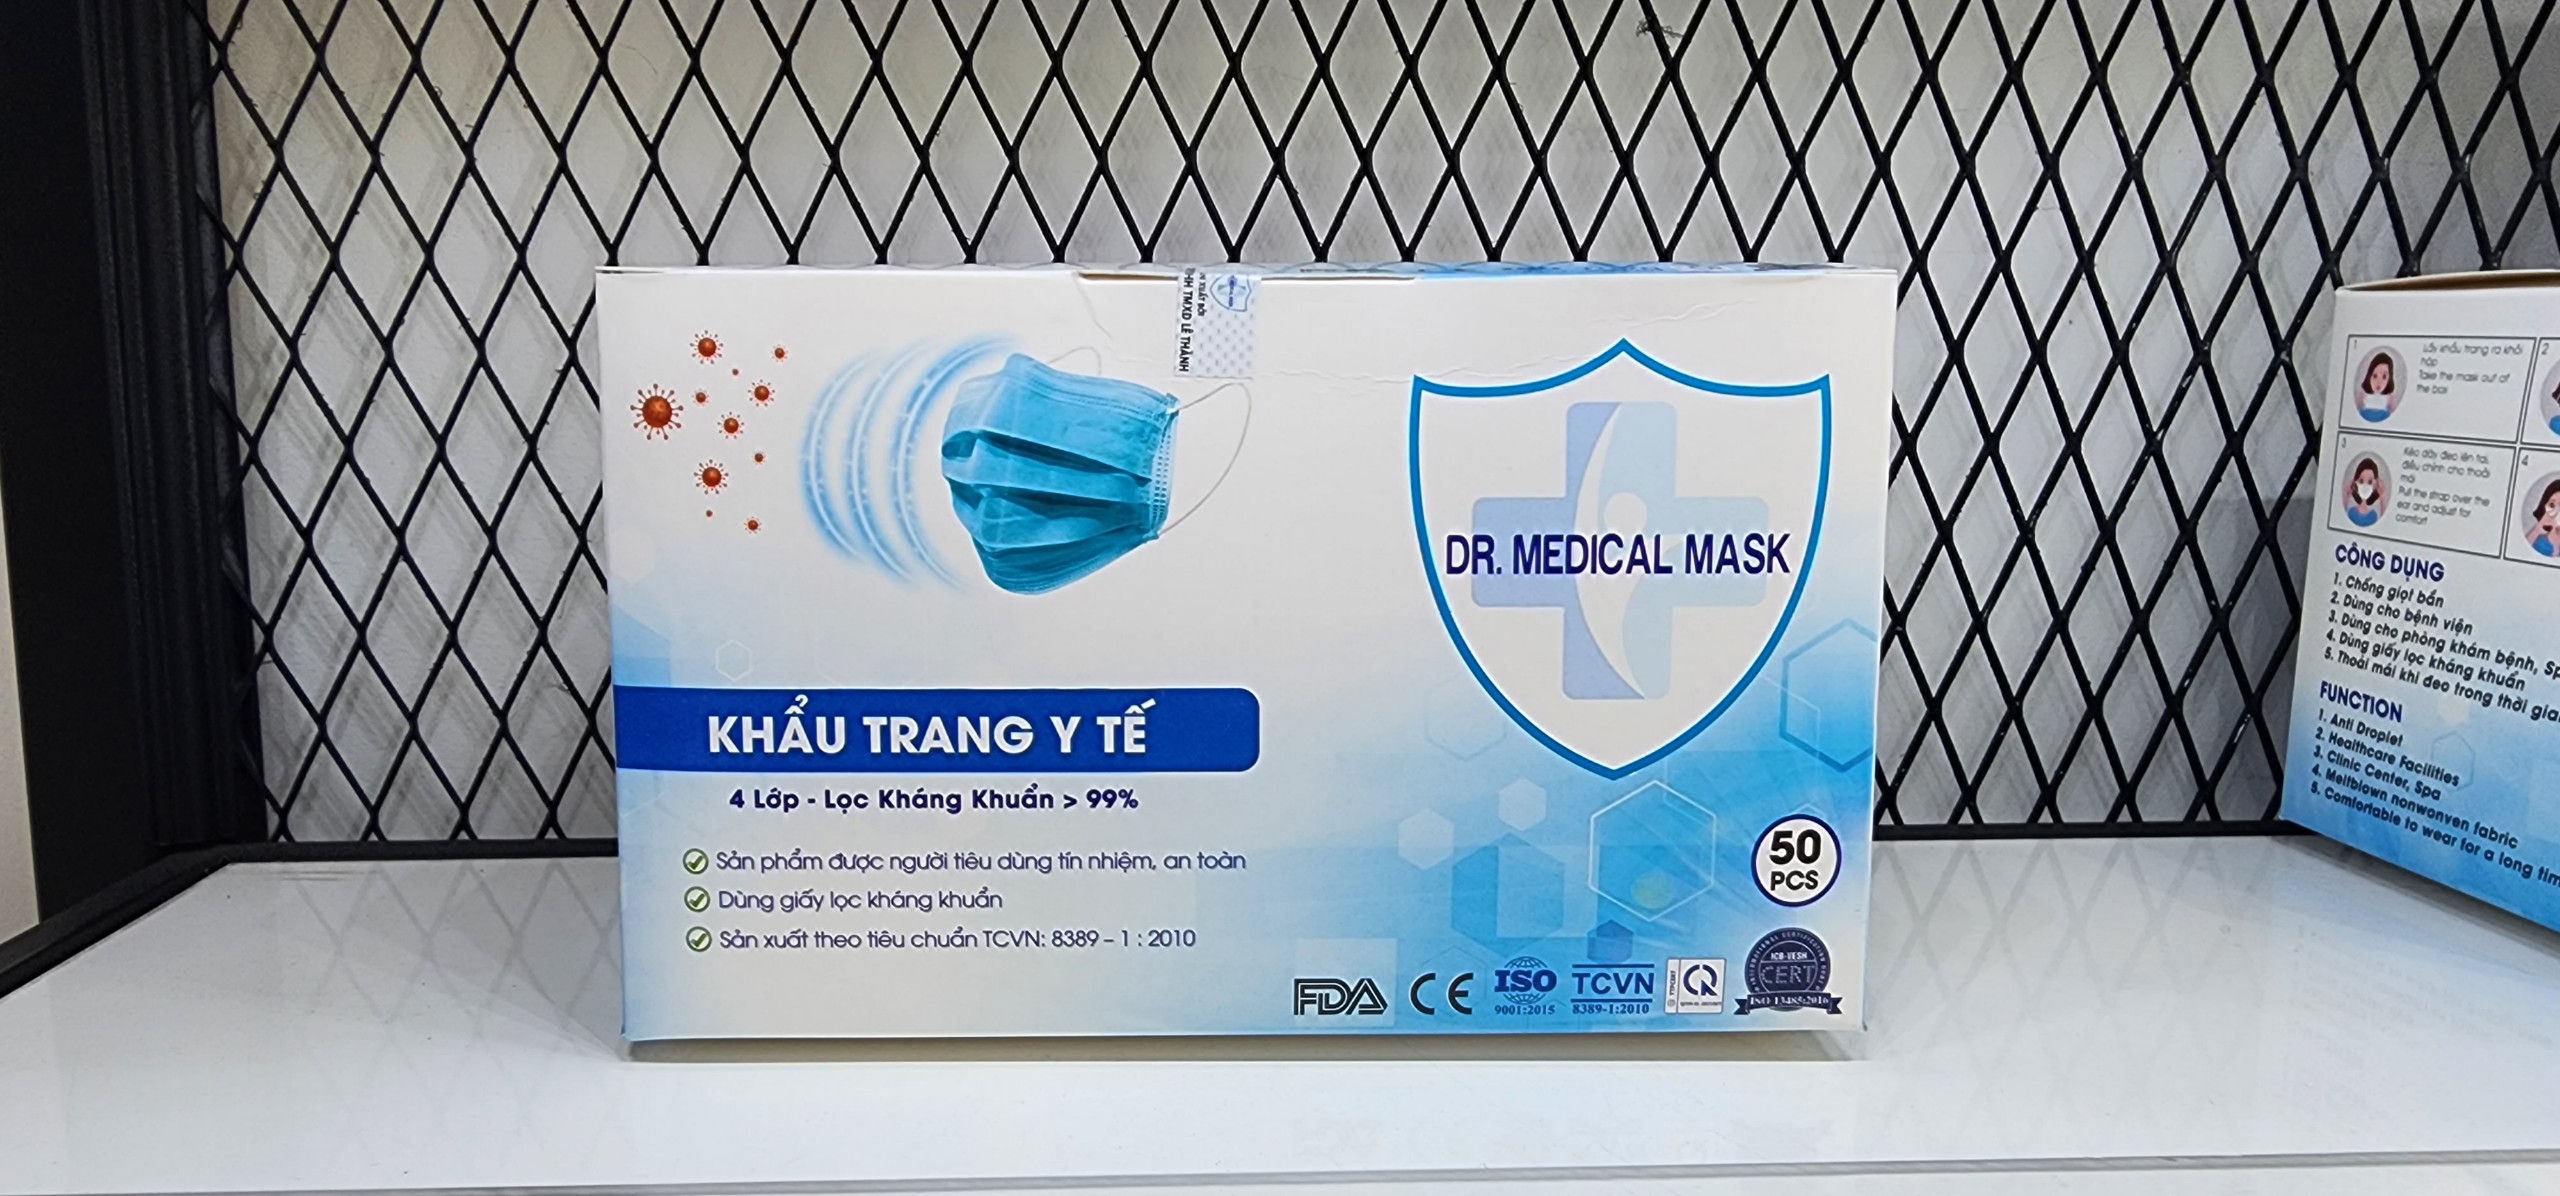 Khẩu trang y tế 4 lớp - Dr Medical Mask